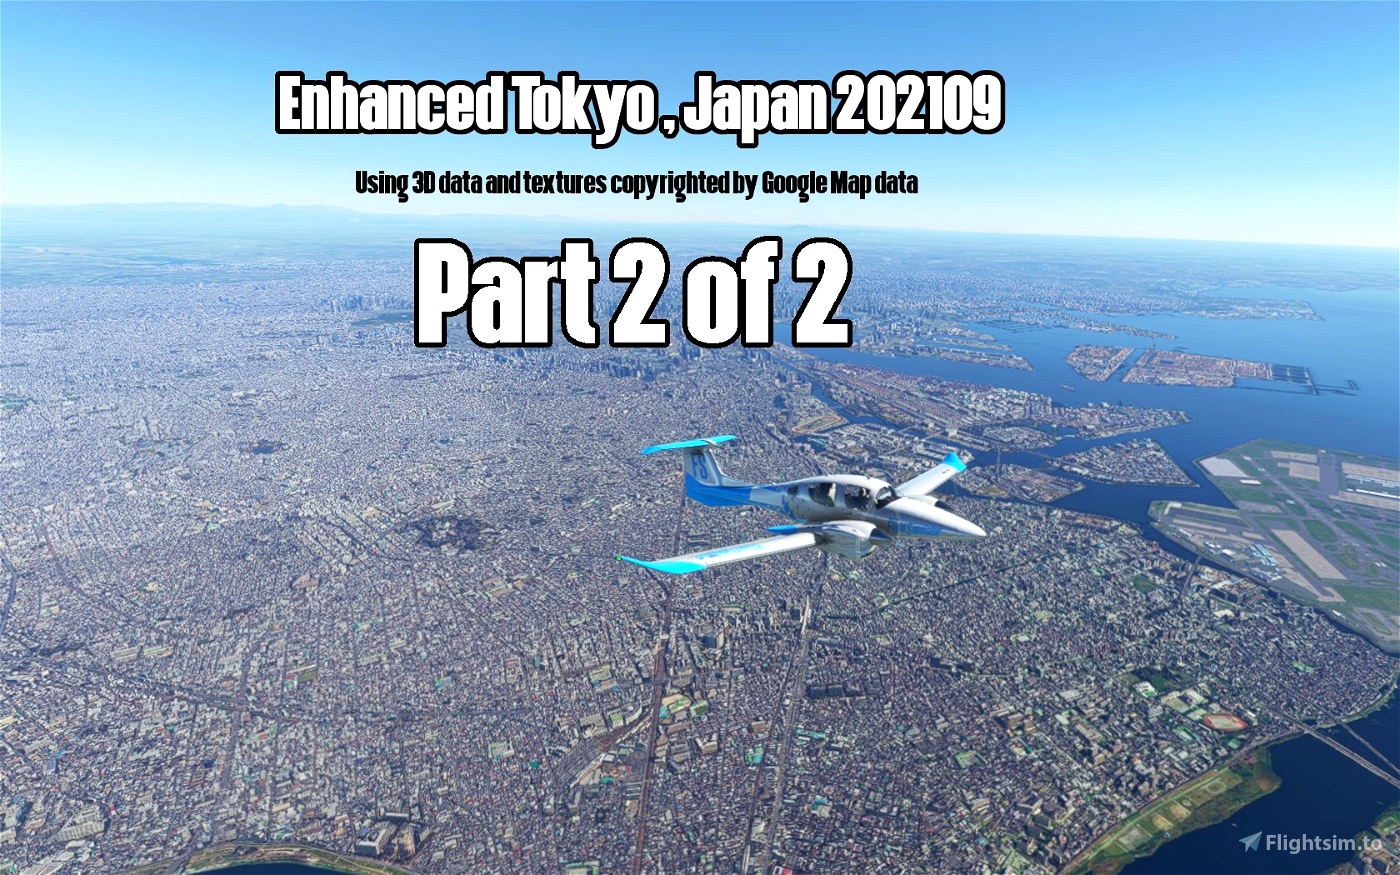 Enhanced Tokyo, Japan 202109 Part 2 of 2 Microsoft Flight Simulator